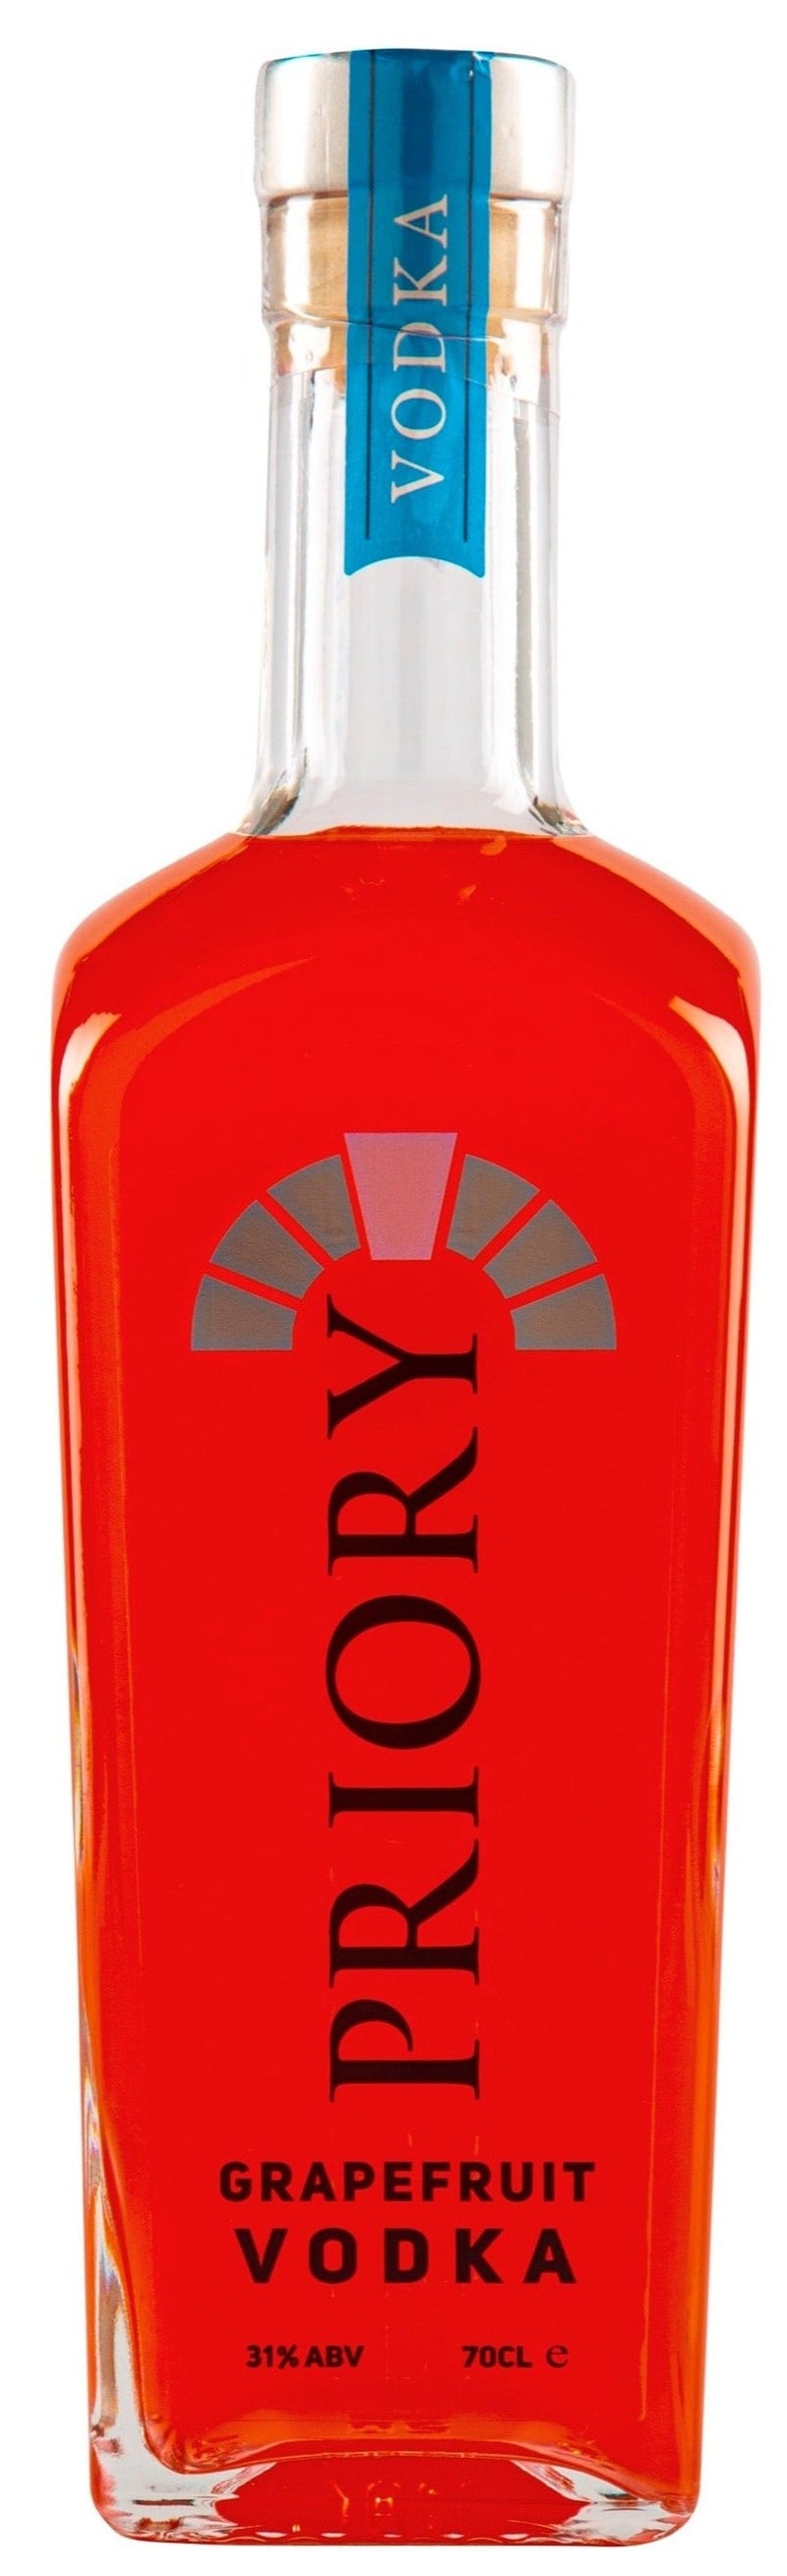 Priory Grapefruit Vodka 70cl